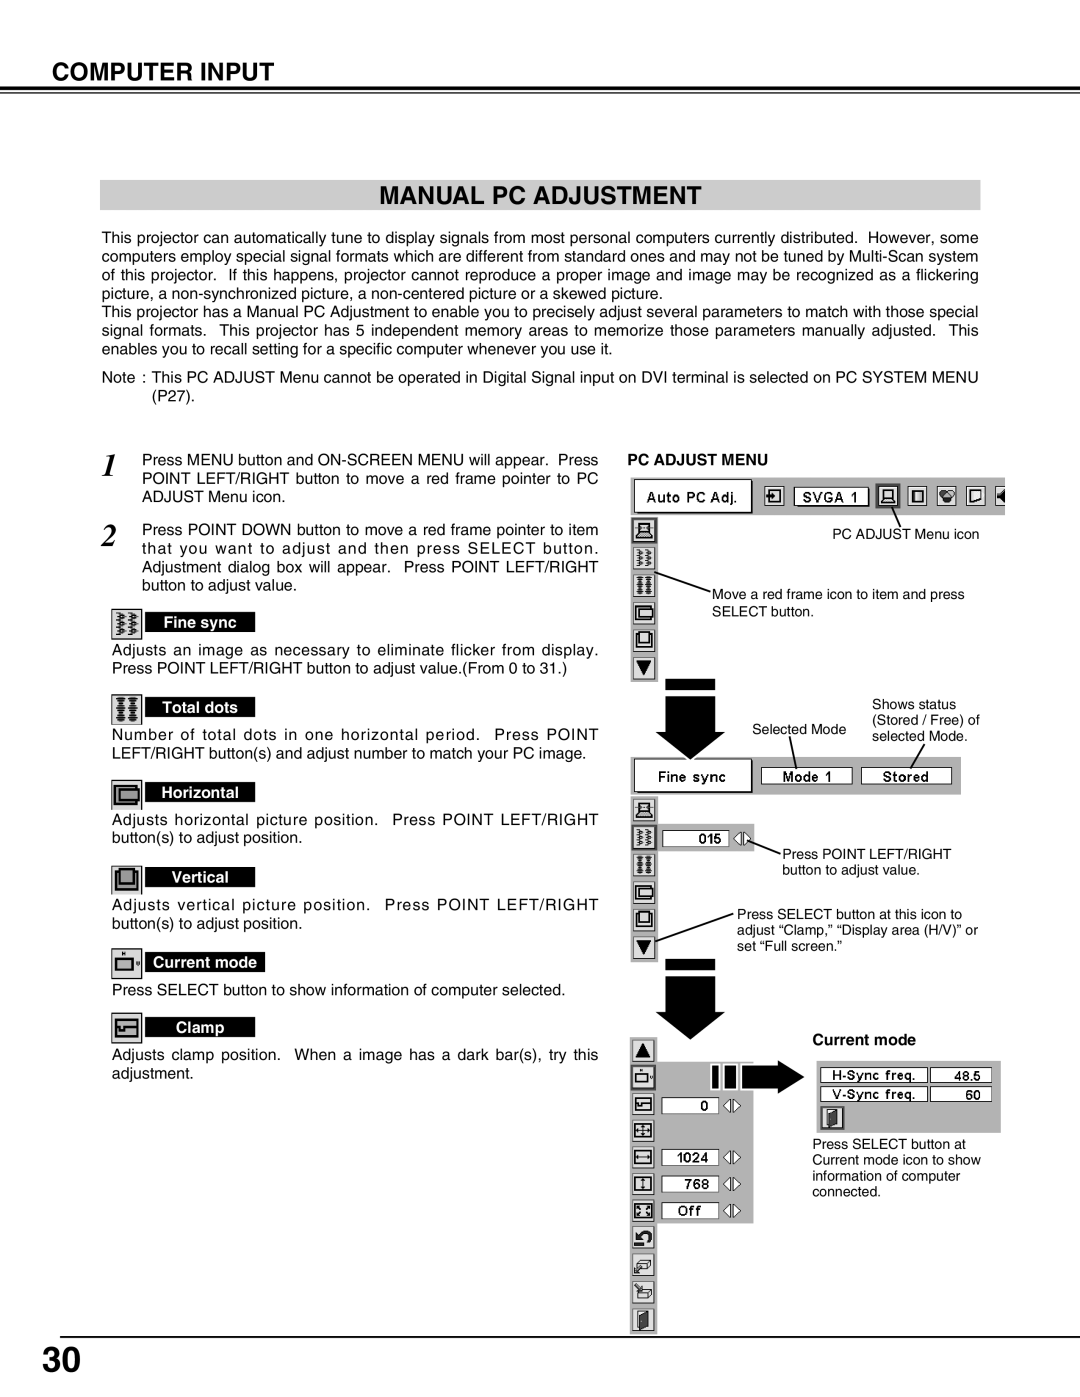 Eiki LC-UXT3 Computer Input Manual Pc Adjustment, Fine sync, Total dots, Horizontal, Vertical, Current mode, Clamp 